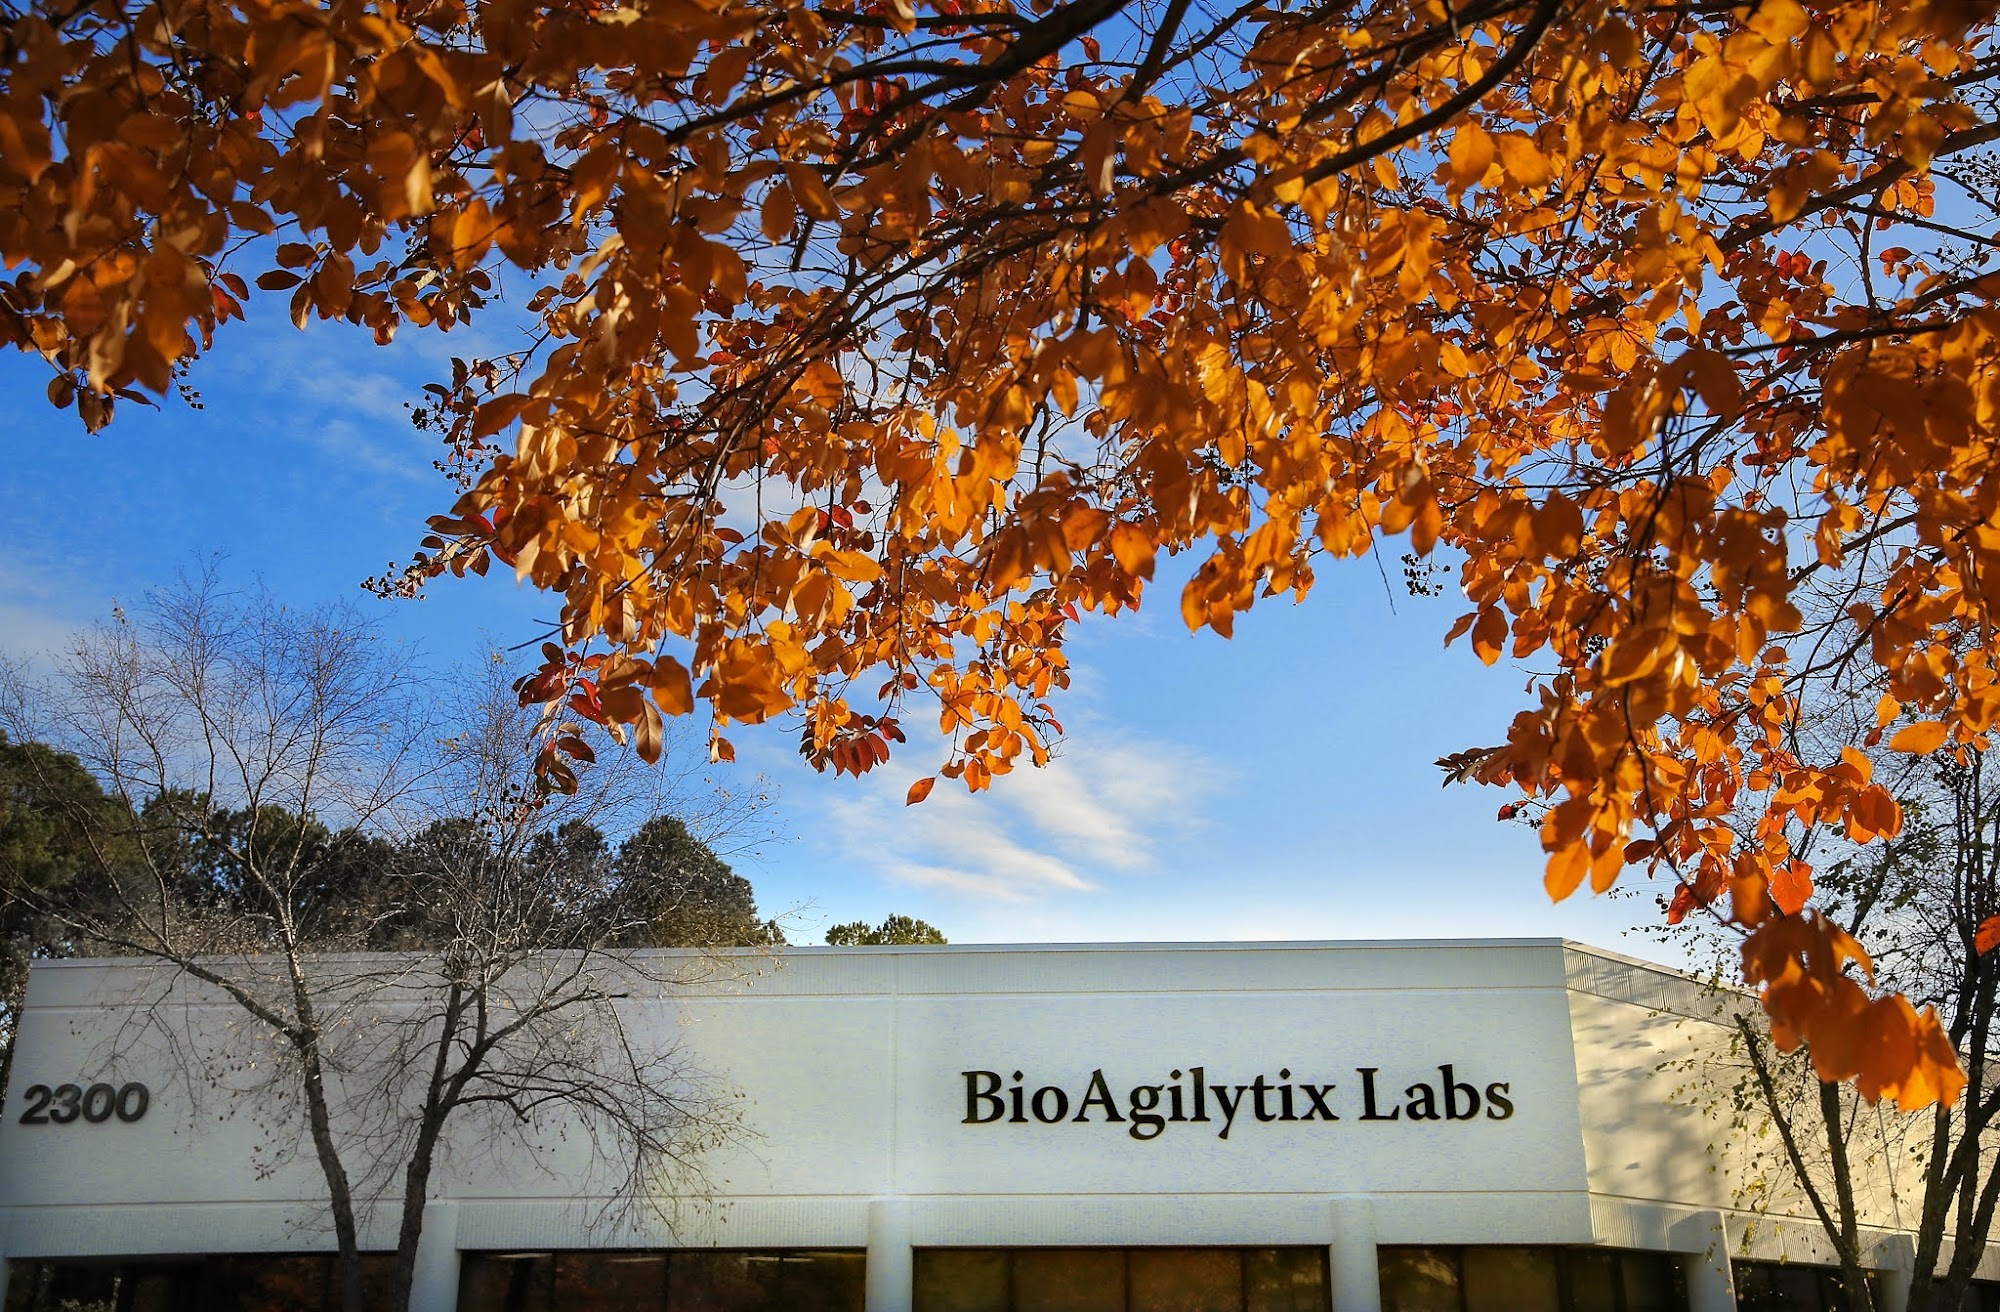 BioAgilytix Labs